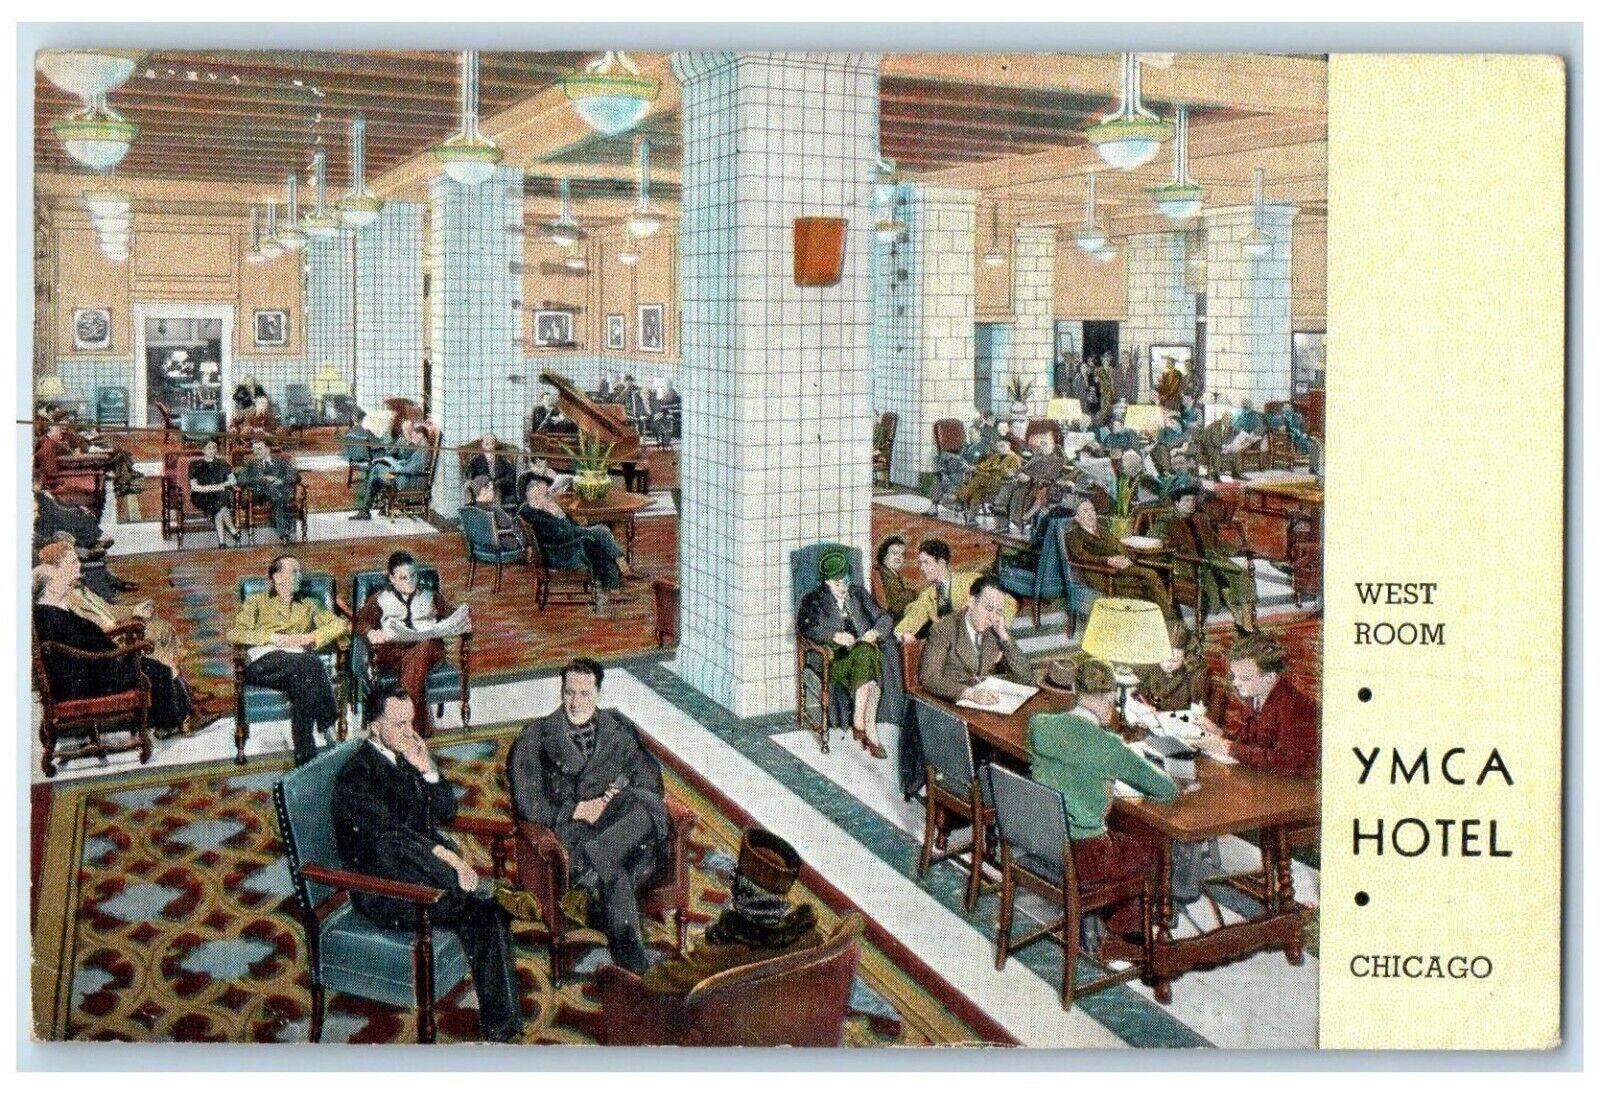 1940 YMCA Hotel Wabash Avenue Lounge Interior Chicago Illinois Vintage Postcard